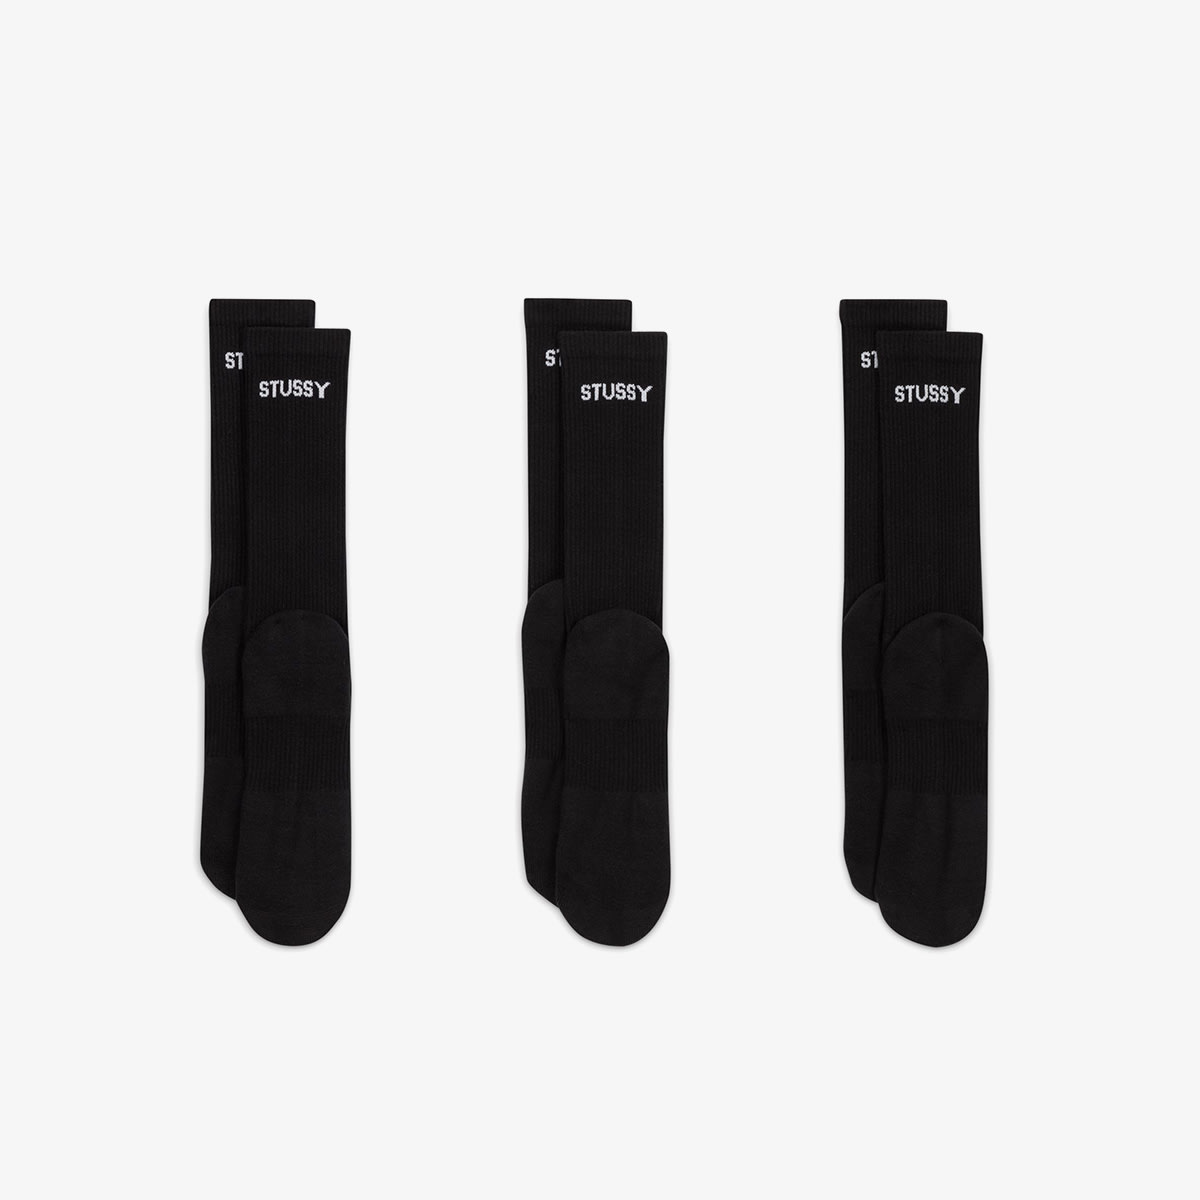 Nike x Stussy Socks (Black & White) | END. Launches